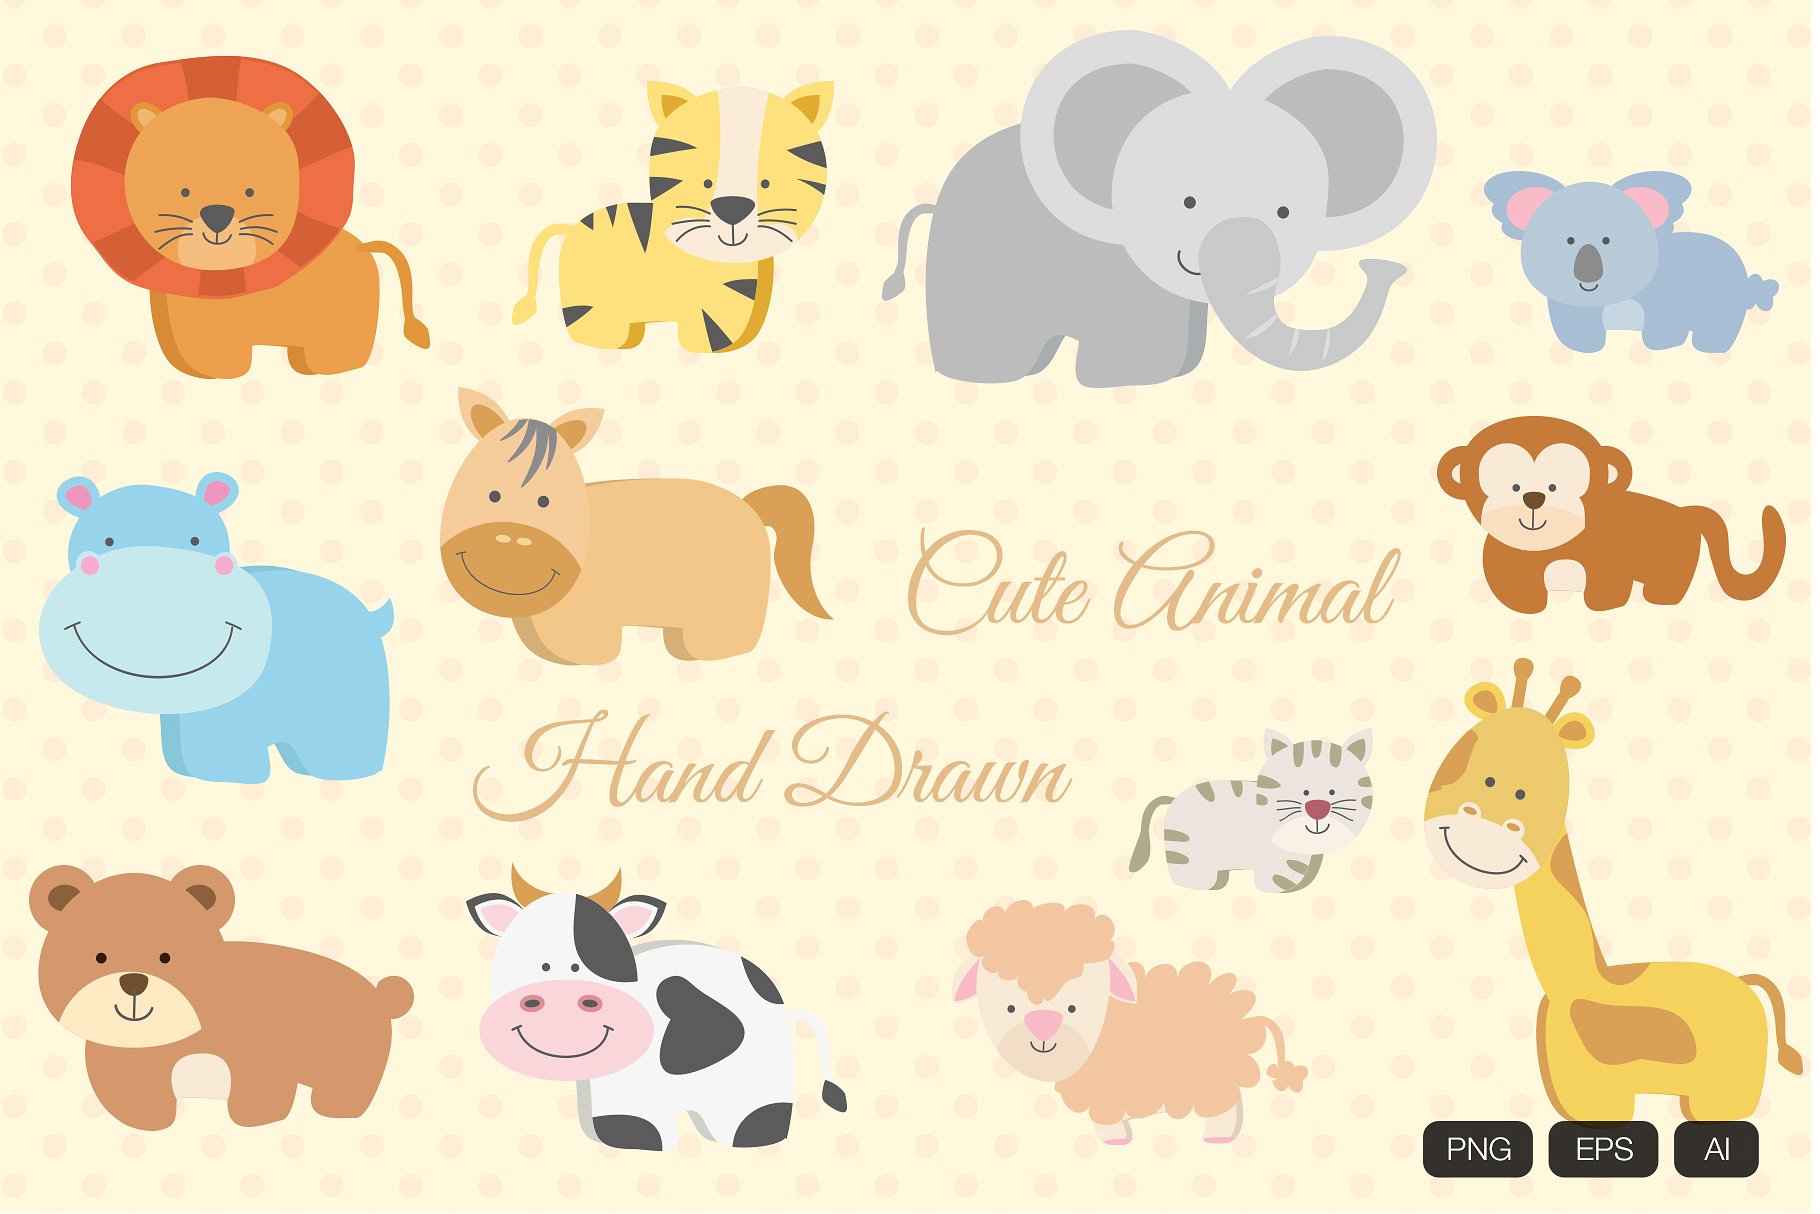 可爱动物插画设计素材12 Animal Hand Drawn